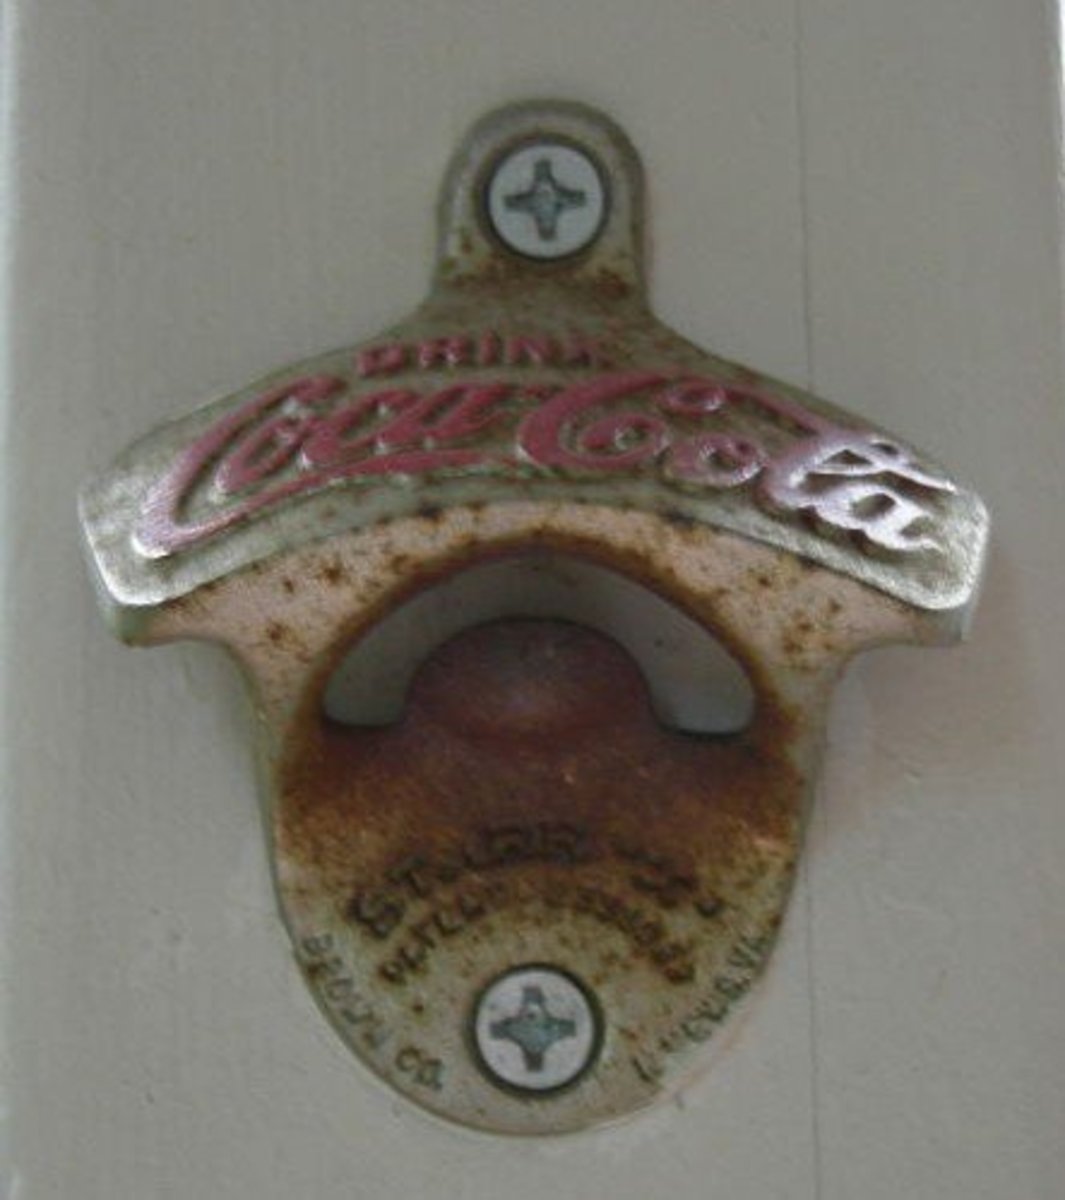 Vintage Coca-Cola bottle opener, wall-mounted